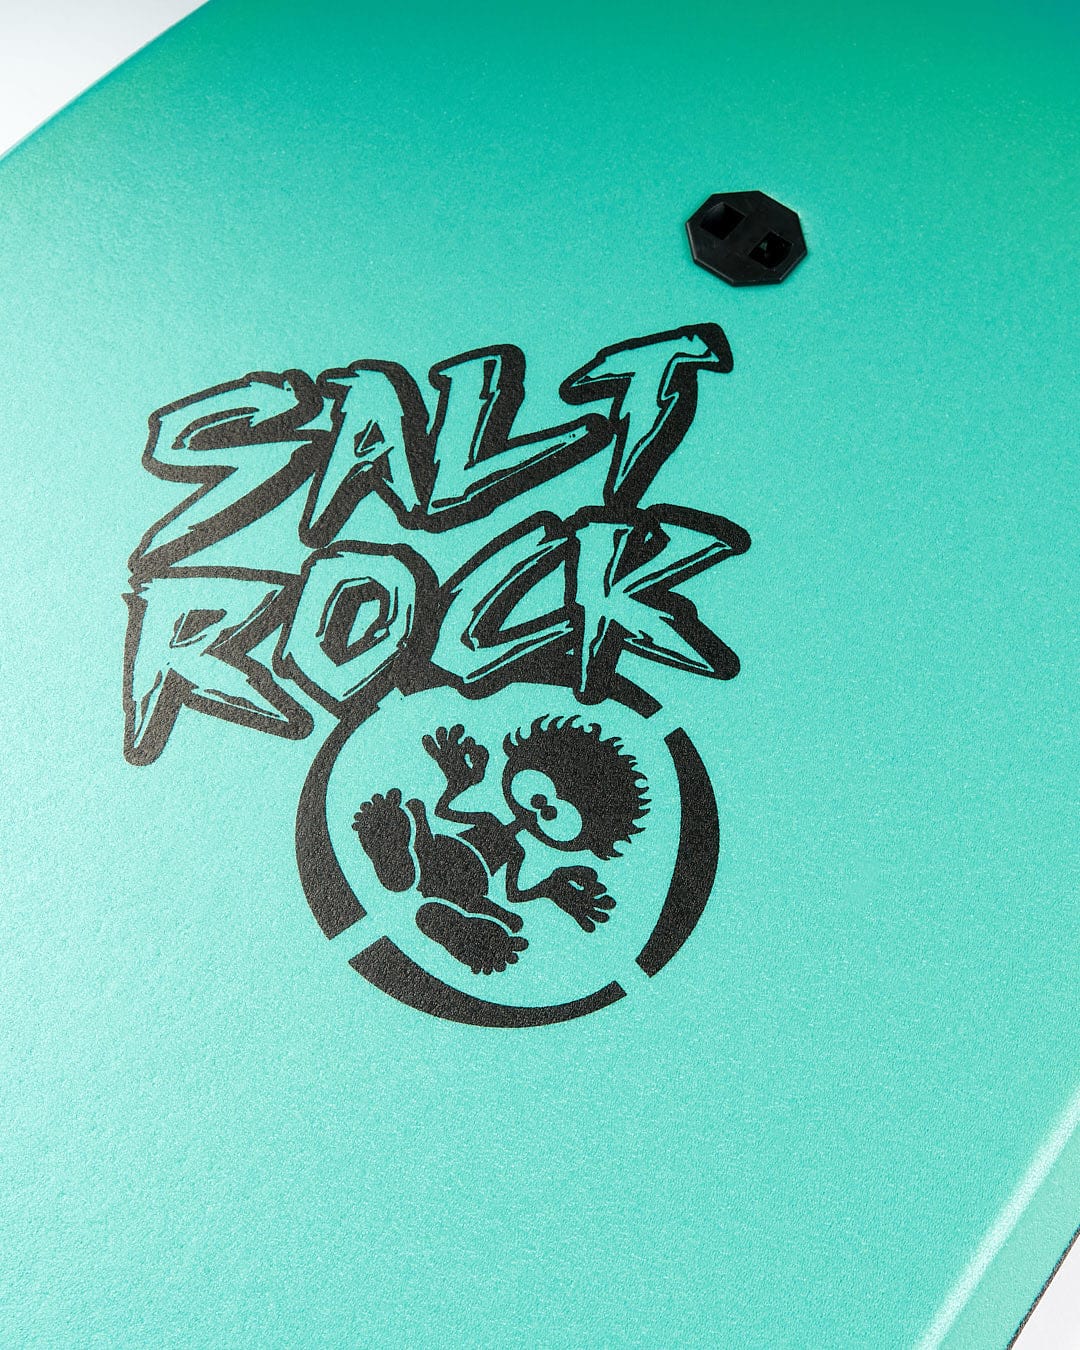 The Saltrock logo is on a Creeper 37" Bodyboard - Turquoise.